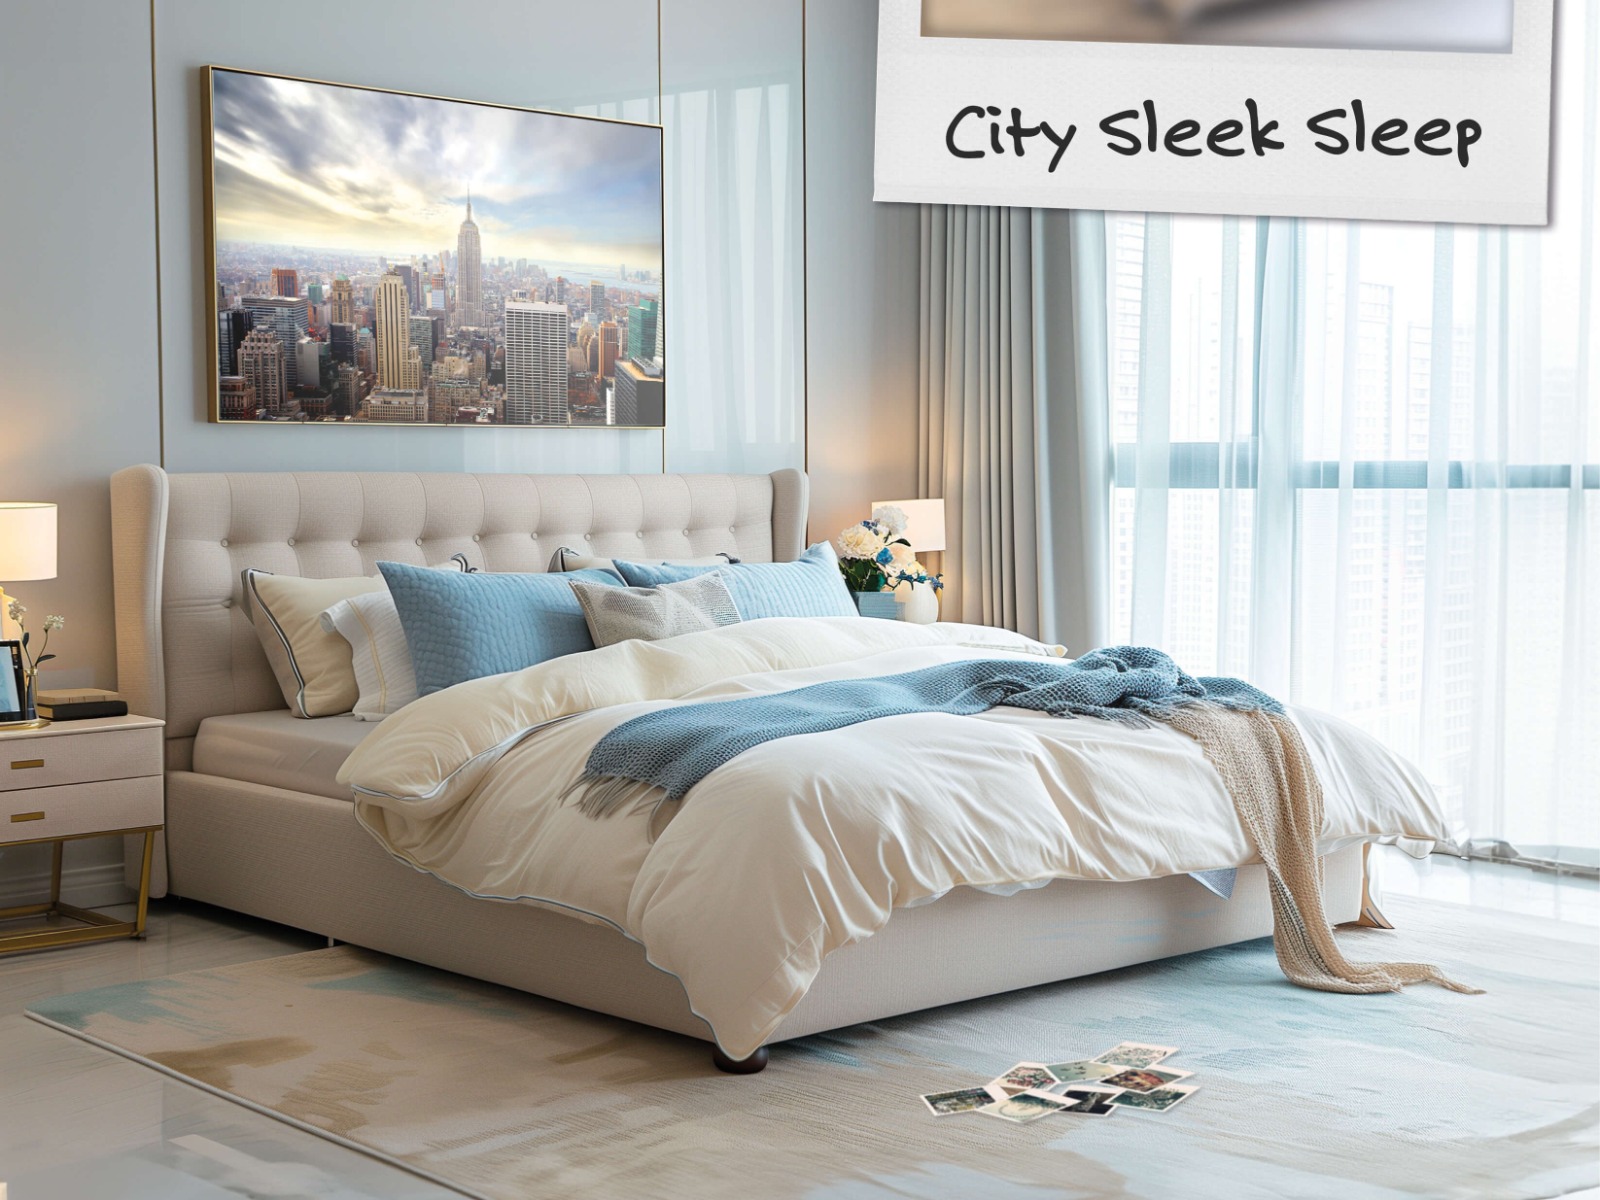 City sleek sleep